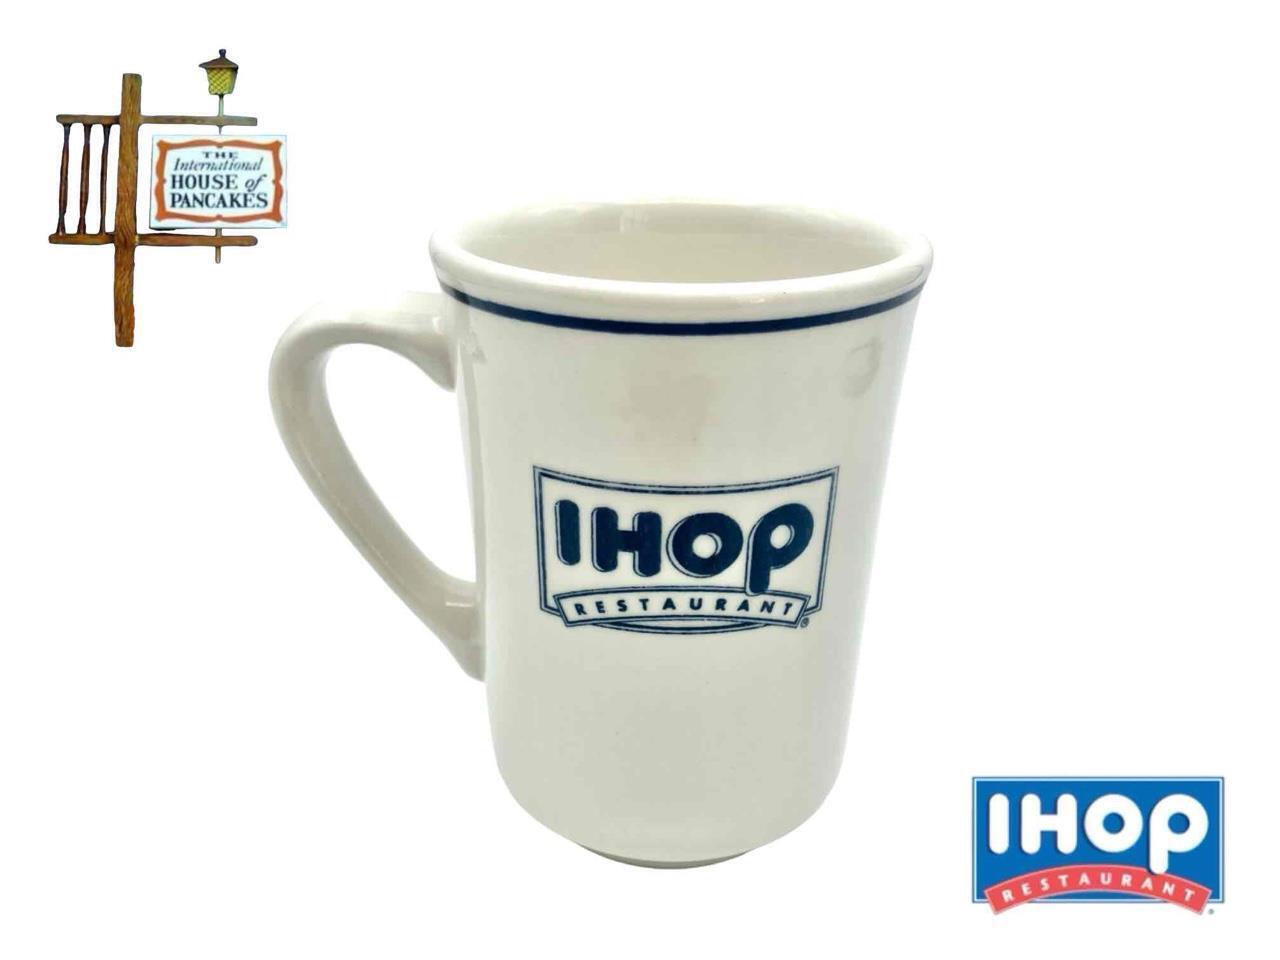 IHOP Intl House of Pancakes Restaurant Ware Coffee Mug Cup Buffalo Stamp 8 fl oz